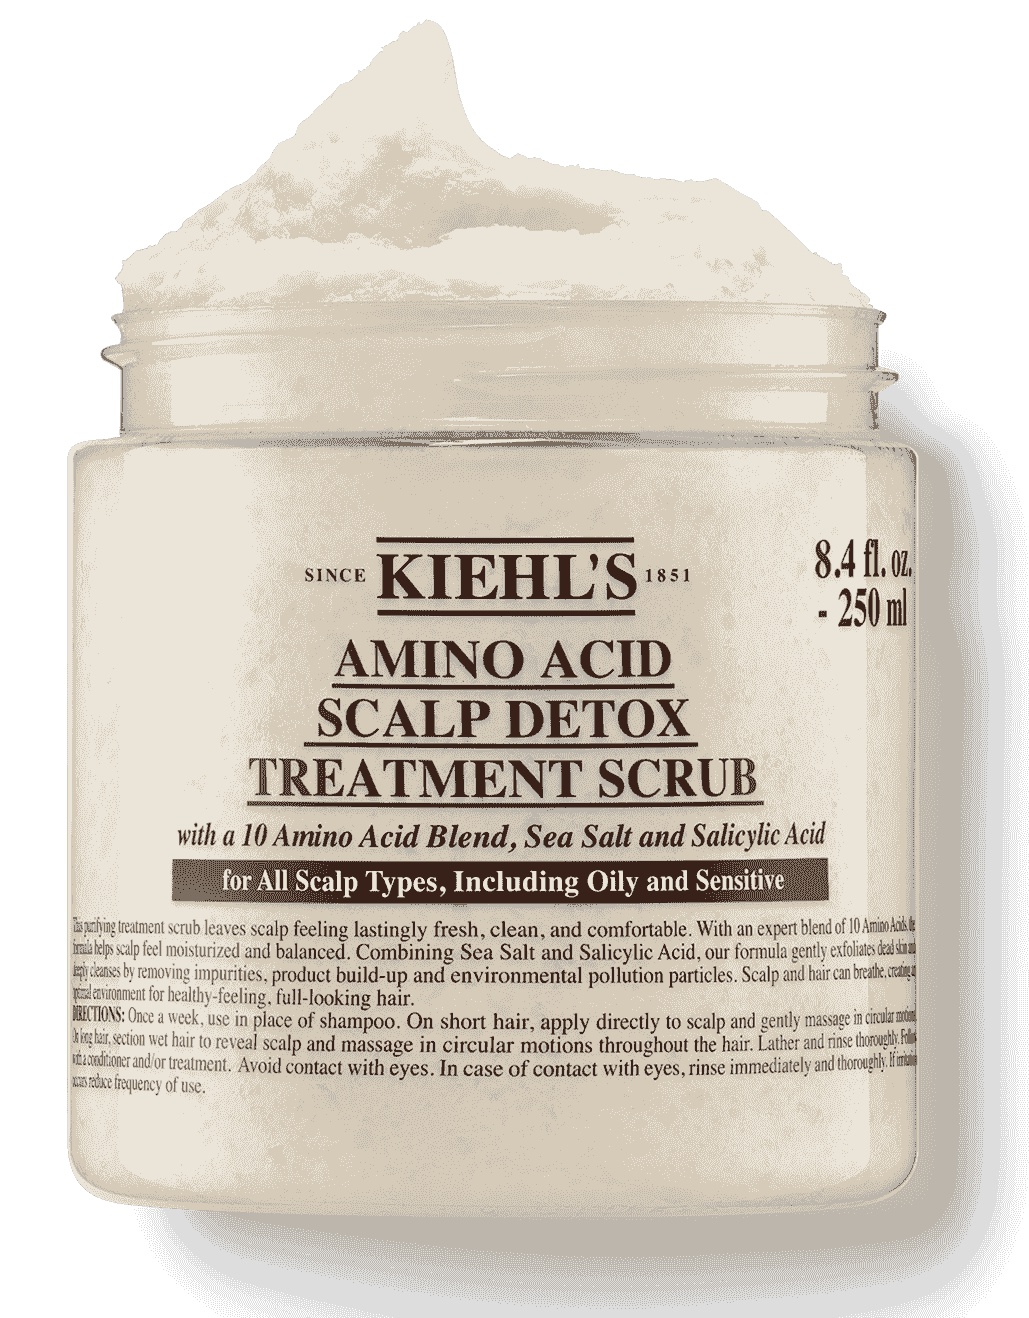 Kiehl’s Amino Acid Scalp Detox Treatment Scrub ingredients (Explained)